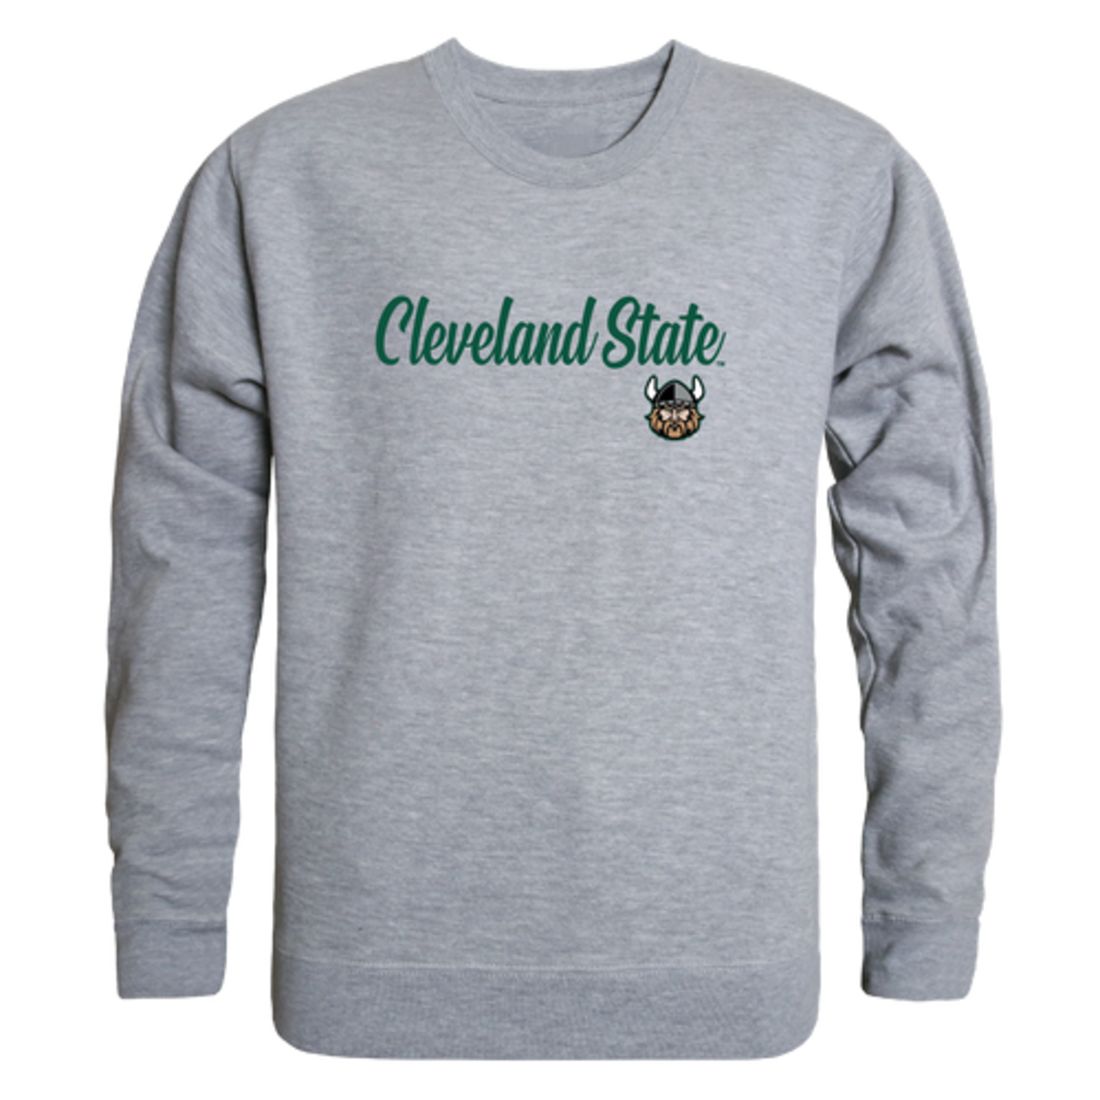 CSU Cleveland State University Vikings Script Crewneck Pullover Sweatshirt Sweater Black-Campus-Wardrobe